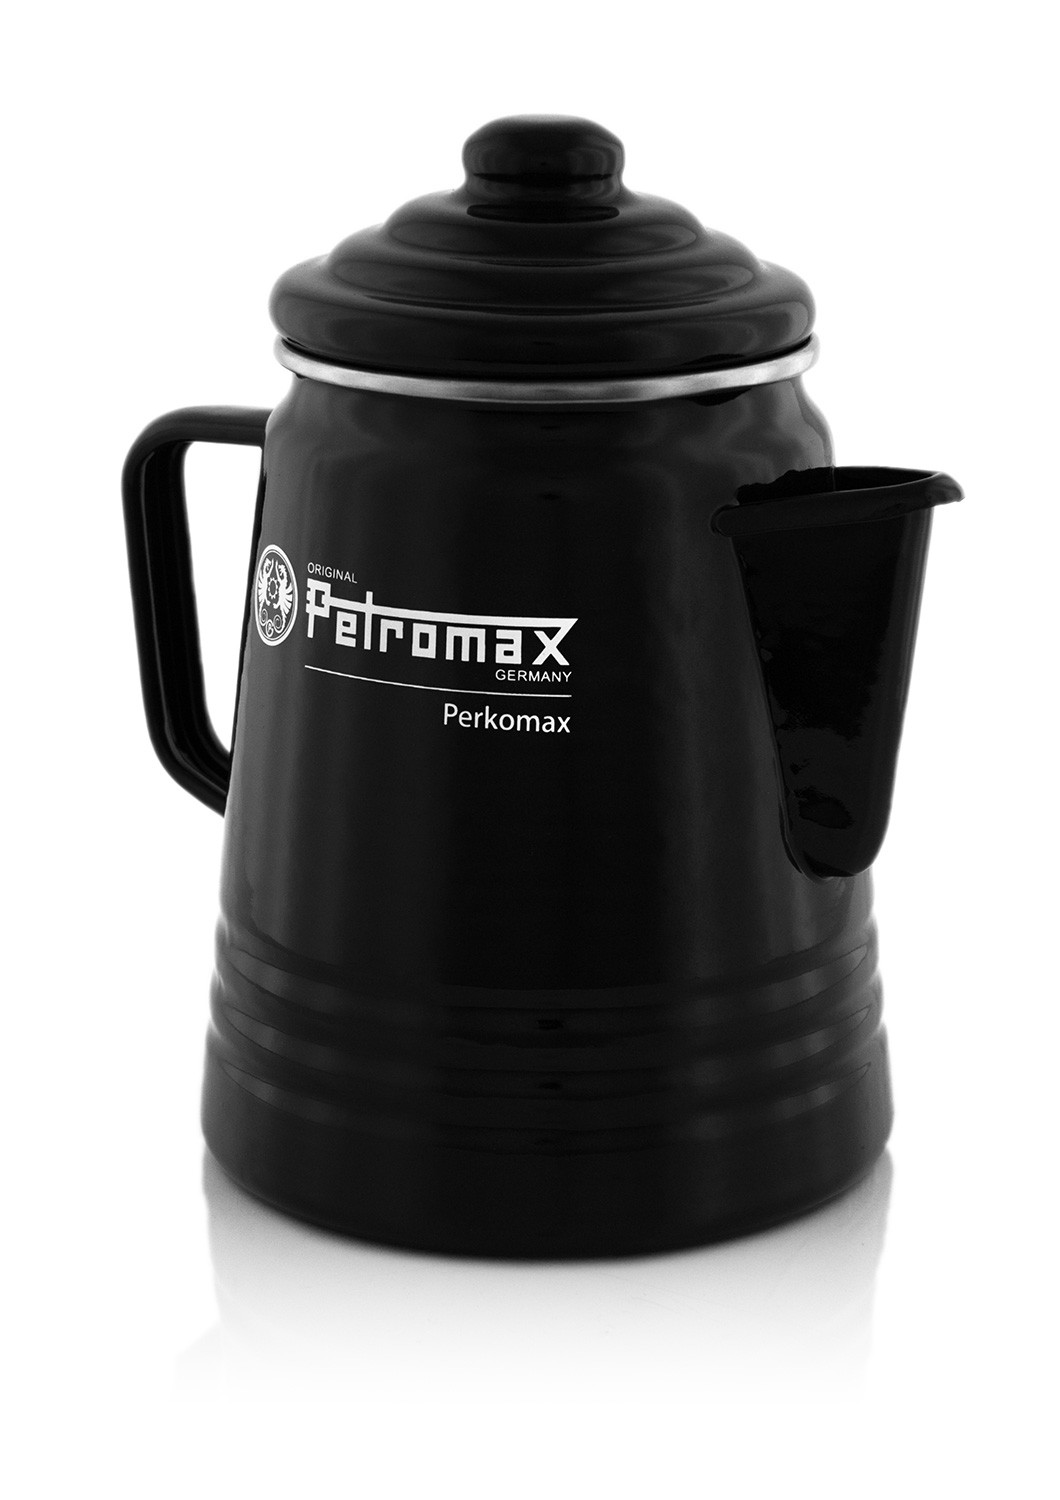 Petromax Perkolator per-9-s Kaffee Tee Kanne Kocher Lagerfeuer Camping weiß